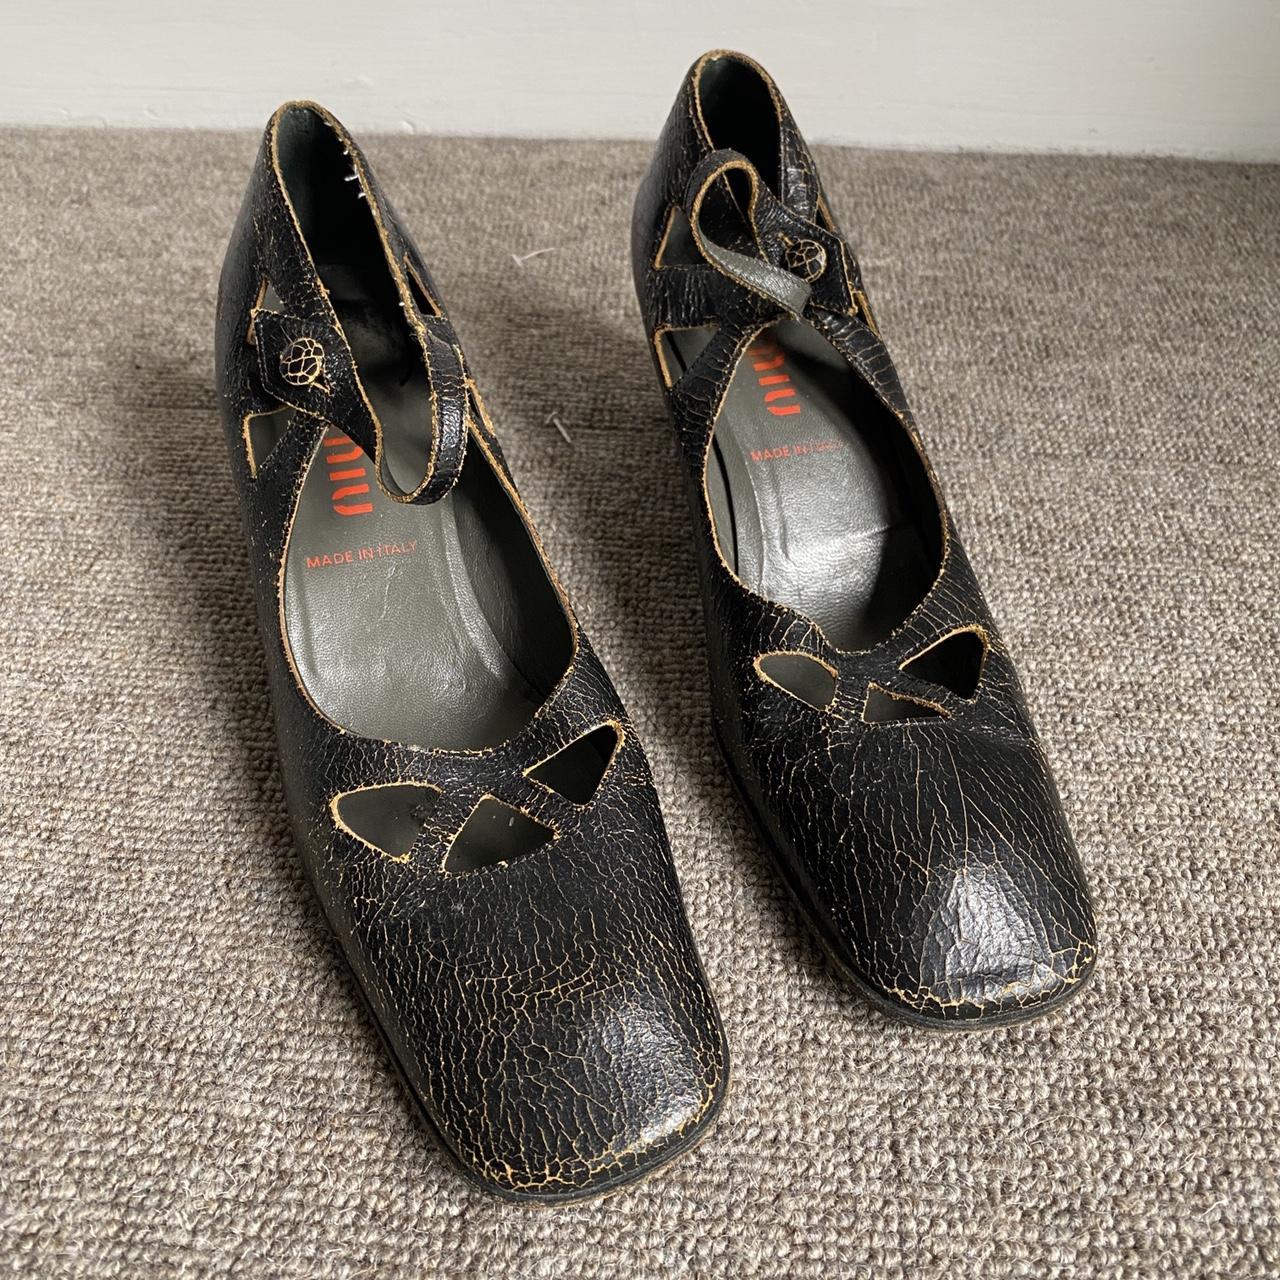 Vintage MIU MIU Mary Jane ballerina shoes size... - Depop